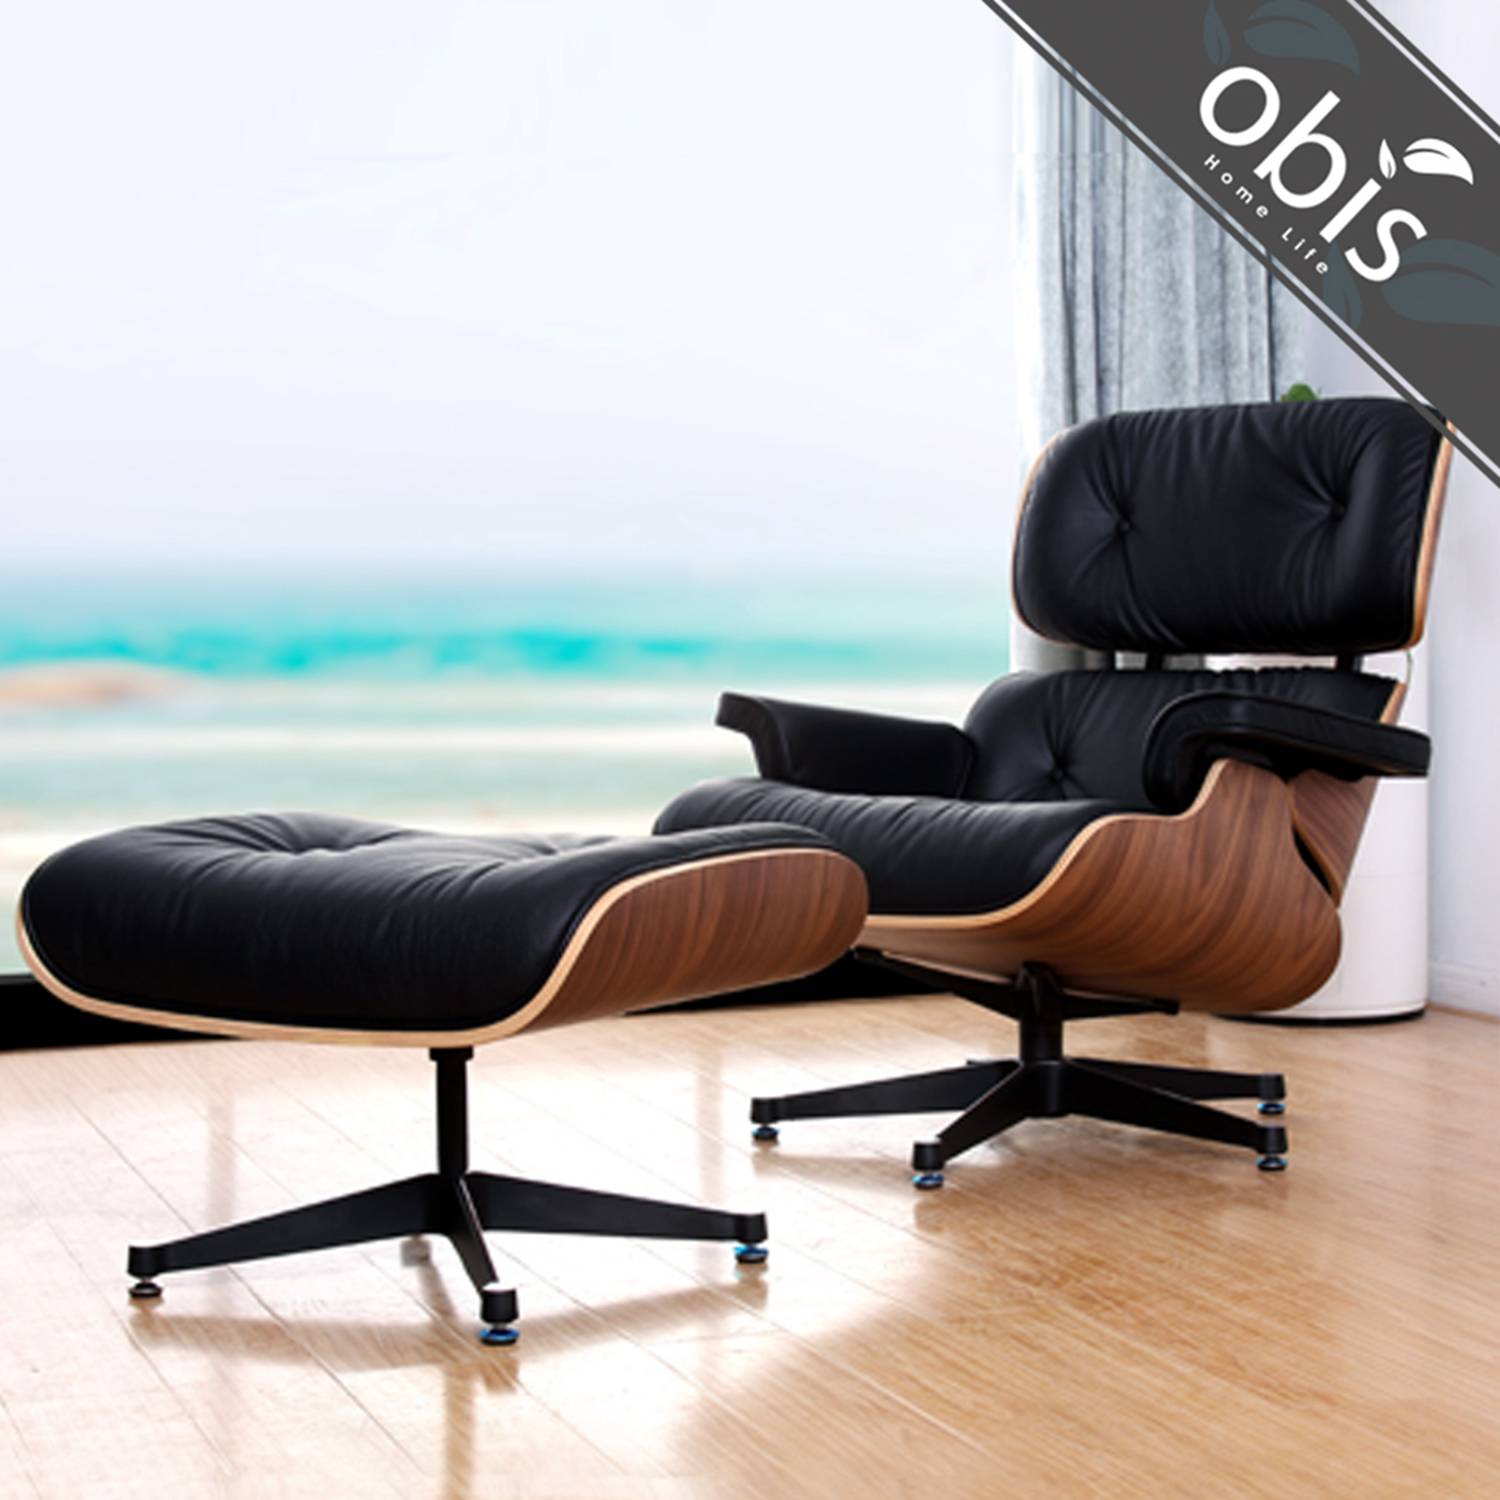 【obis】经典复刻版lounge chair/躺椅